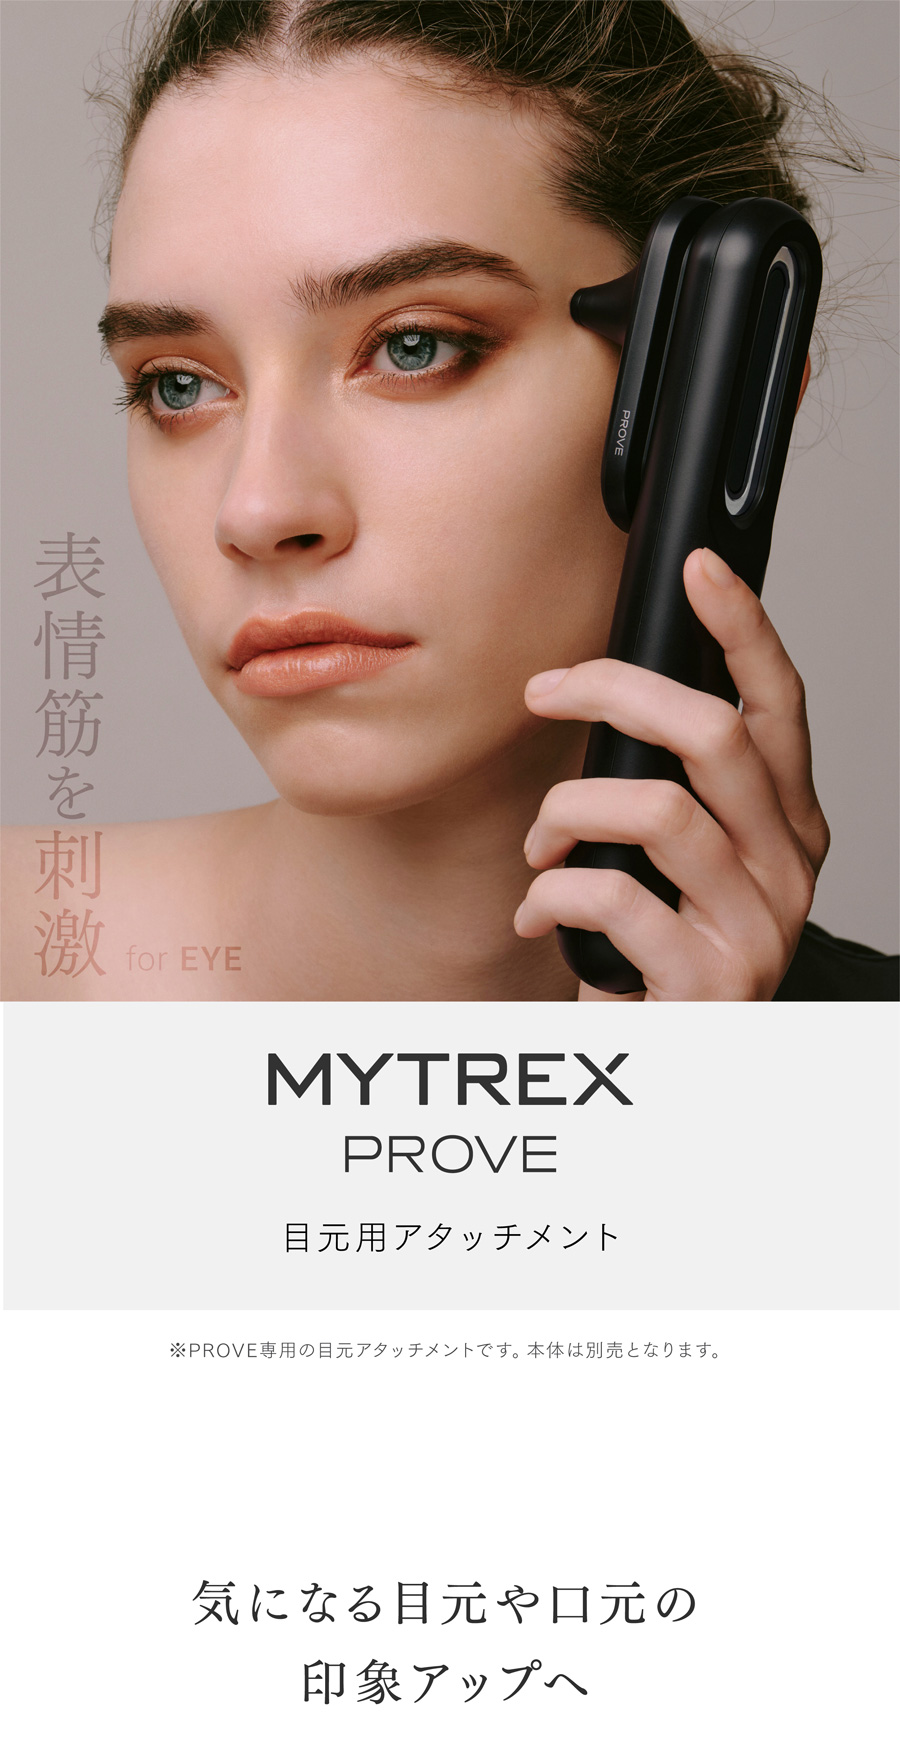 MYTREX PROVE MT-PV22B 専用 目元用アタッチメント トータルリフト